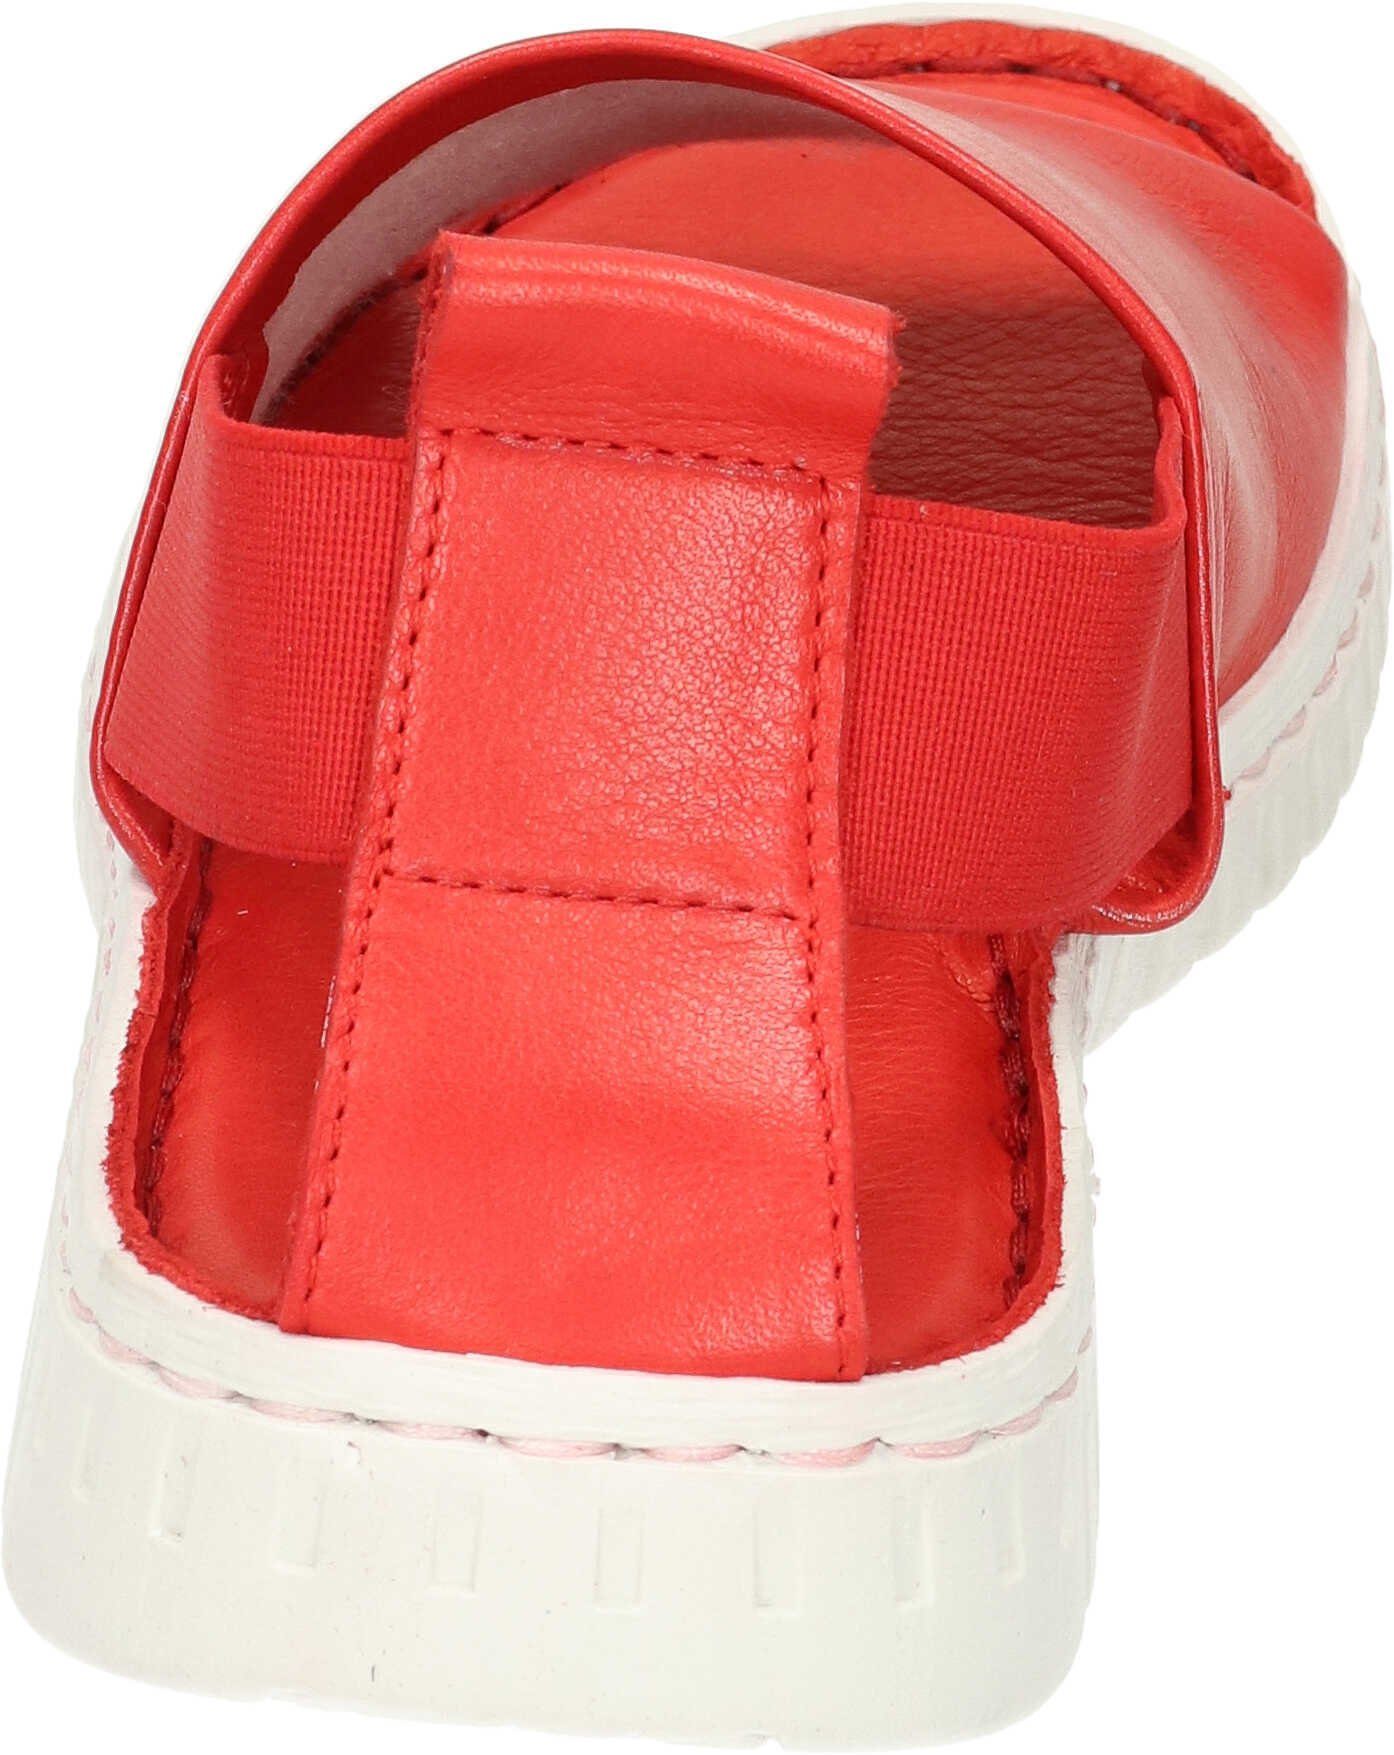 Sandalen rot Manitu echtem Leder Keilsandalette aus